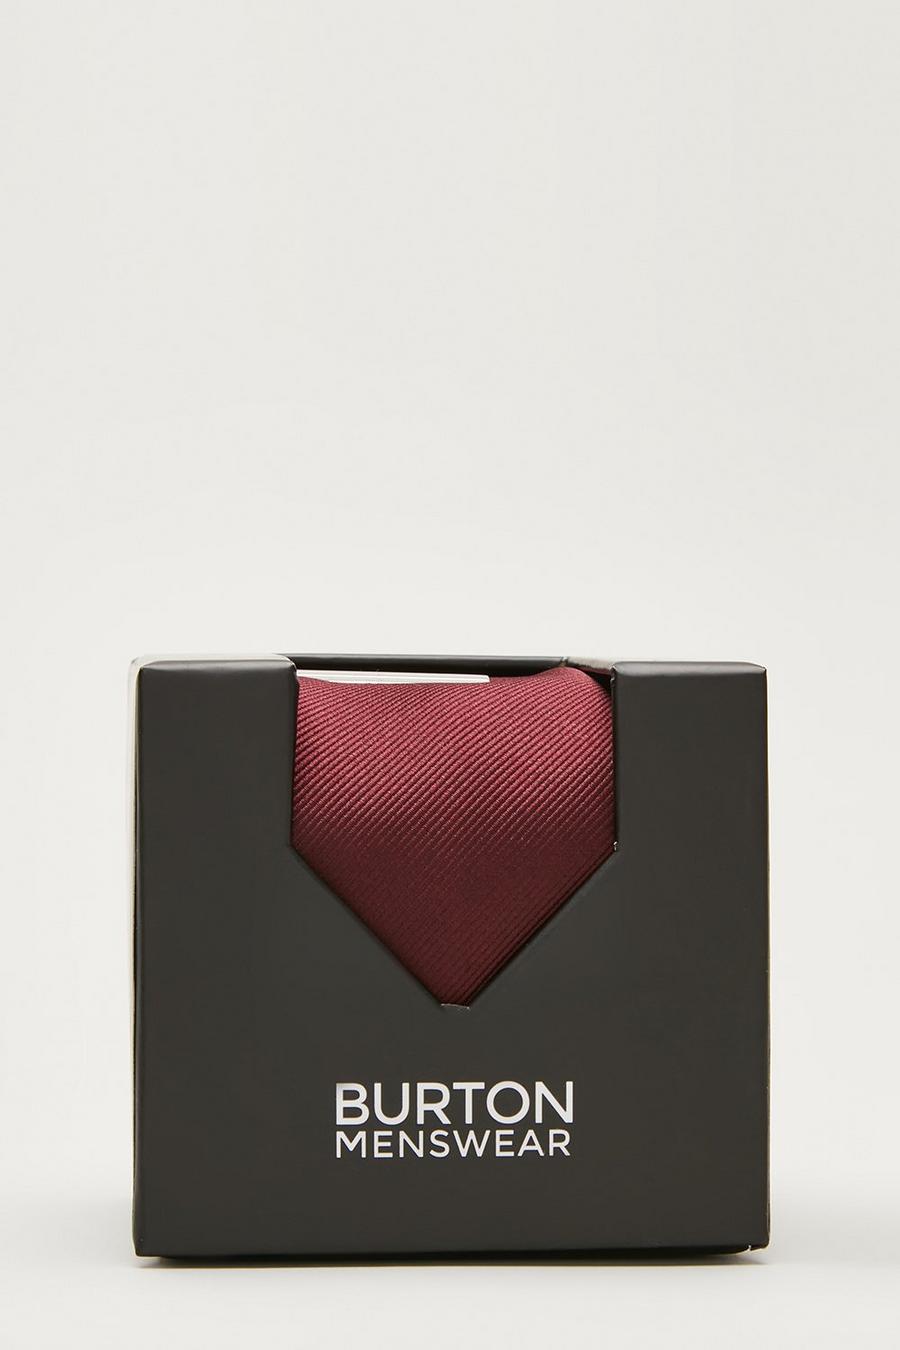 Dark Burgundy Tie, Square and Tie Bar Gifting Box